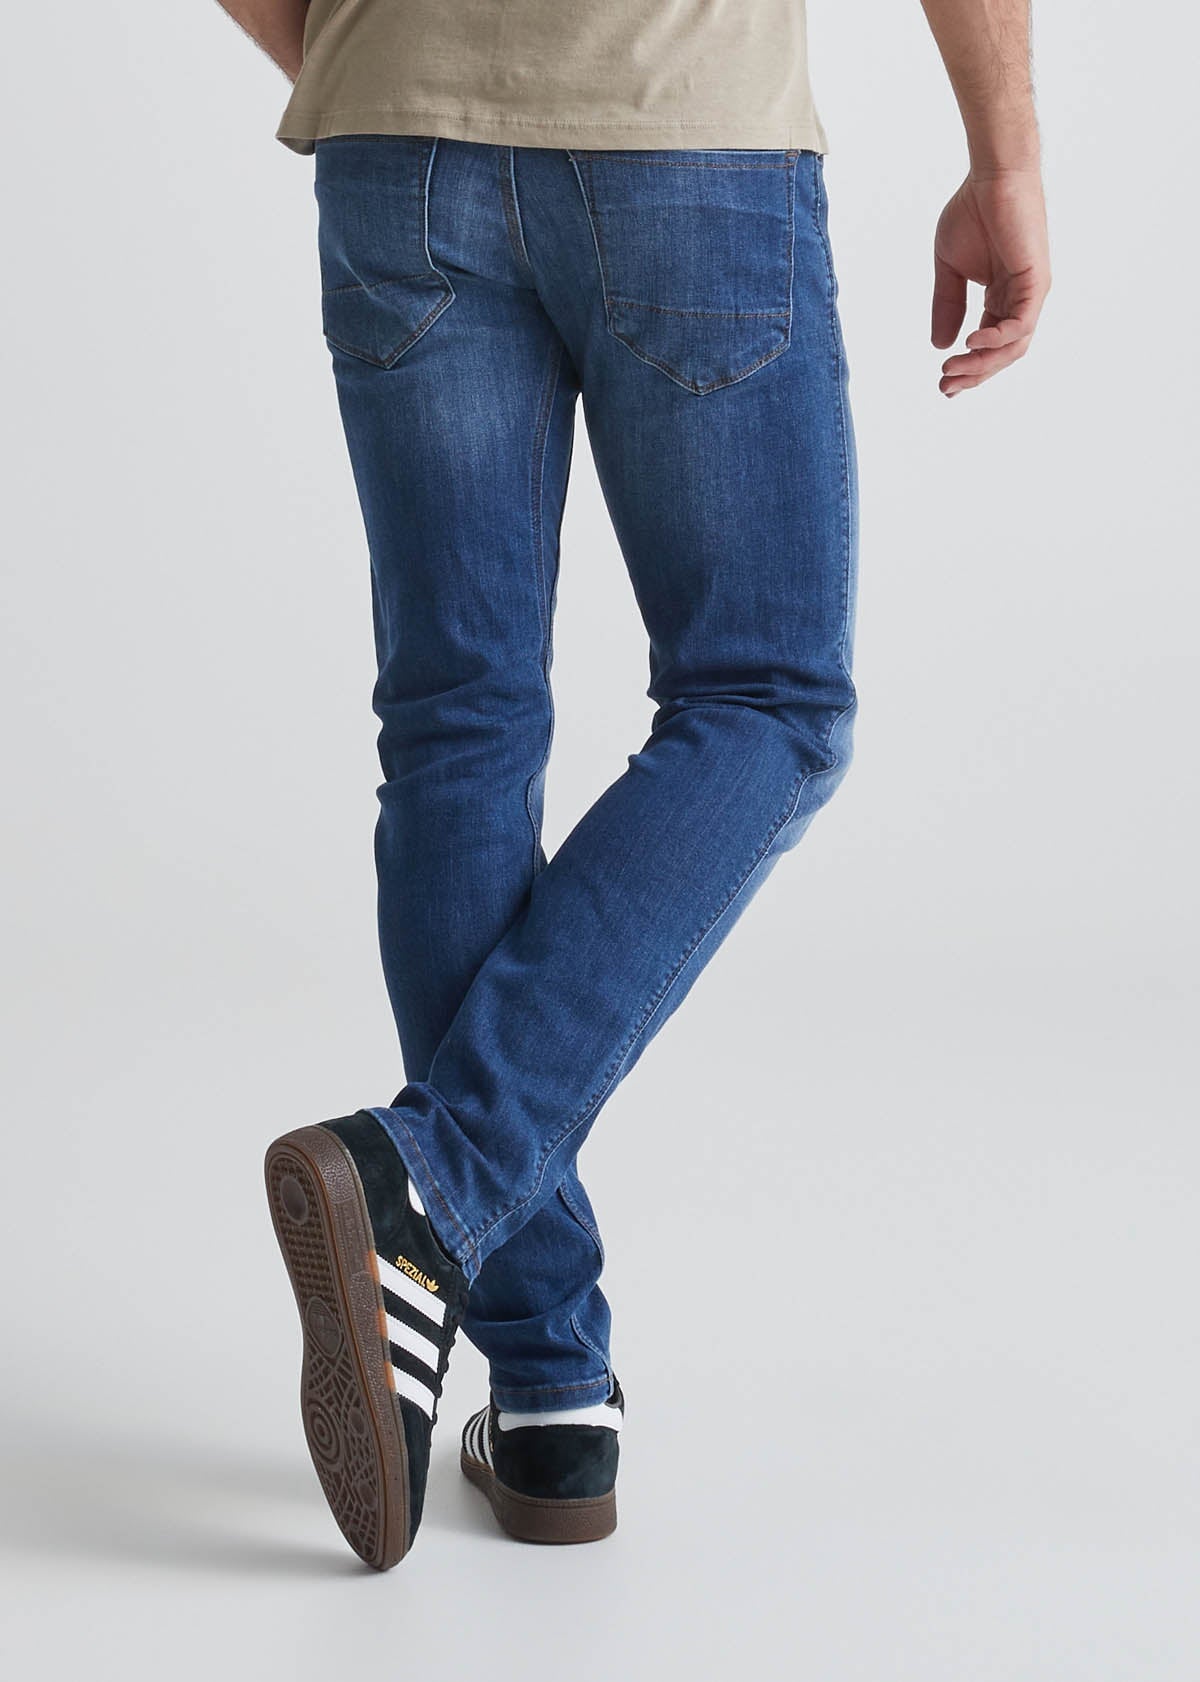 Long Pants For Men Men'S High-End Stretch Nostalgic Frayed Slim-Fit Jeans  Blue Xxxl(36),ac2834